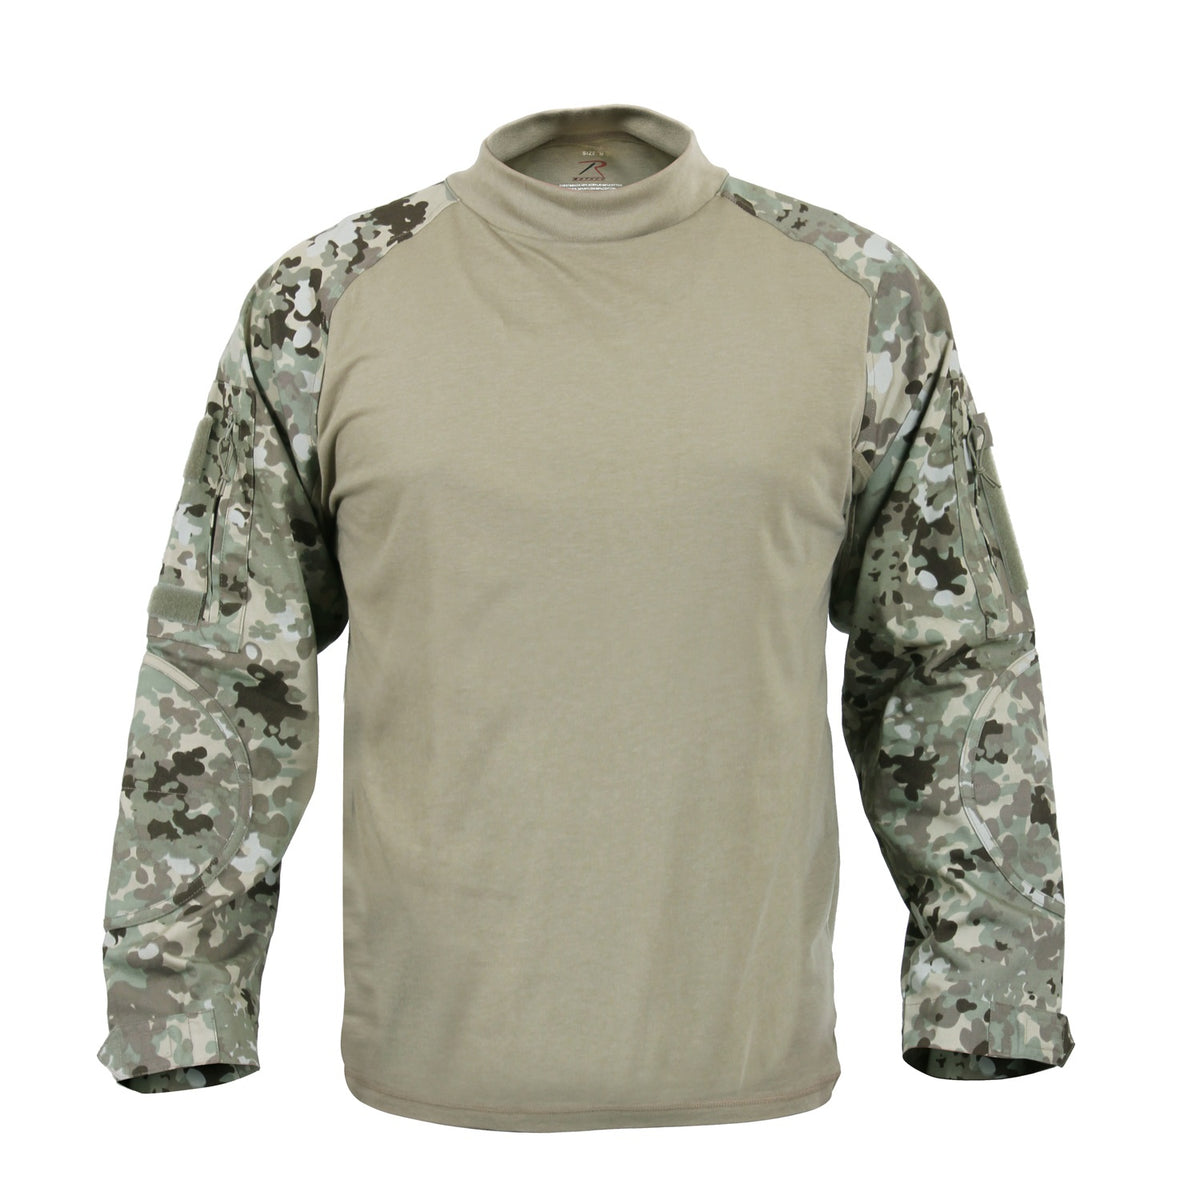 Rothco Military NYCO FR Fire Retardant Combat Shirt Total Terrain Camo